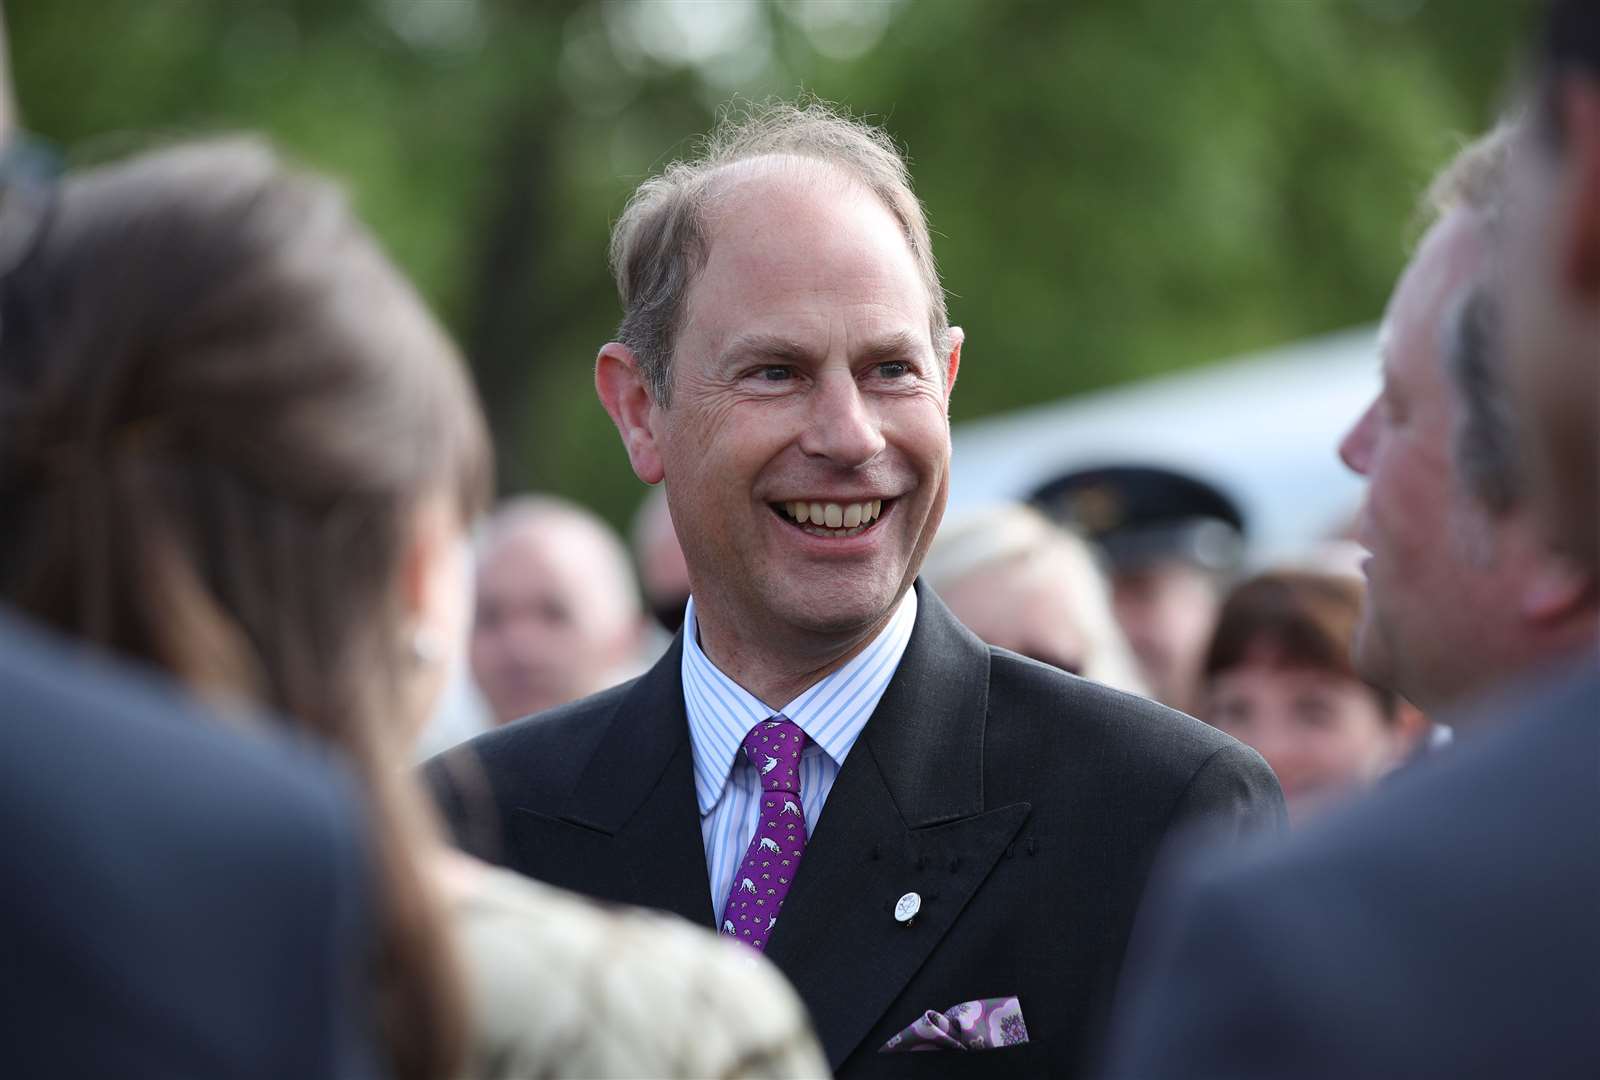 Edward meeting gold award recipients during a Duke of Edinburgh’s Award presentation ceremony in Buckingham Palace garden (Yui Mok/PA)